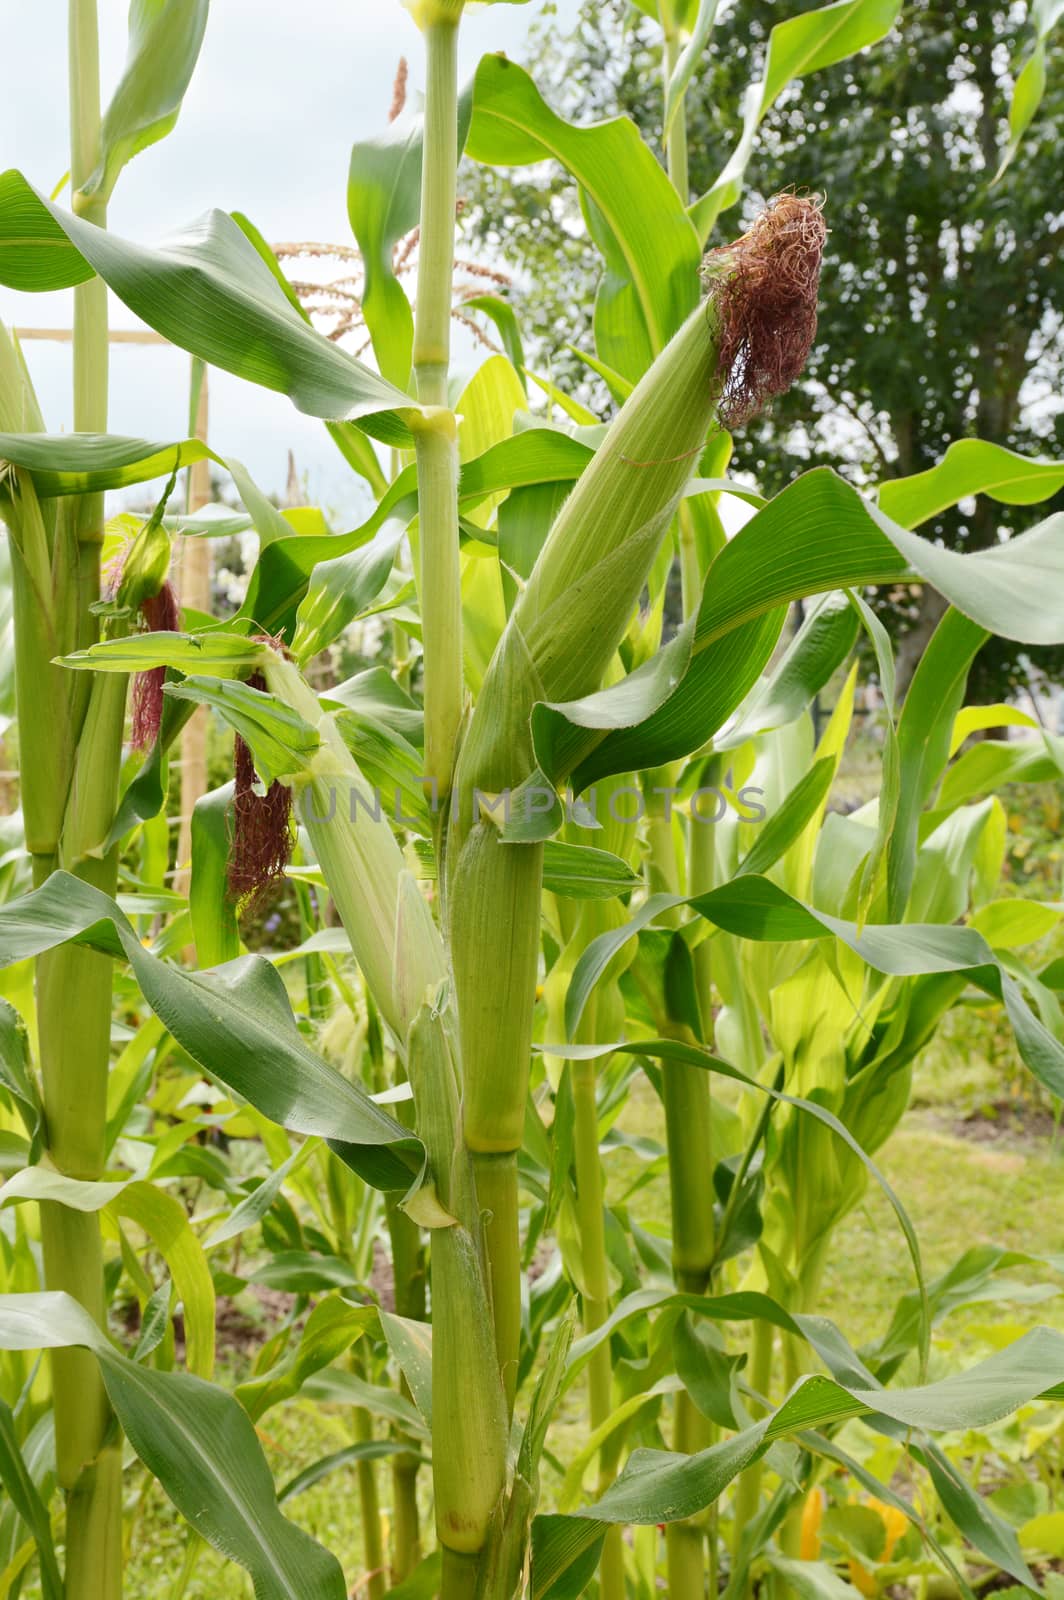 Fat sweetcorn cobs grow on Fiesta maize plants, with dark pollinated silks